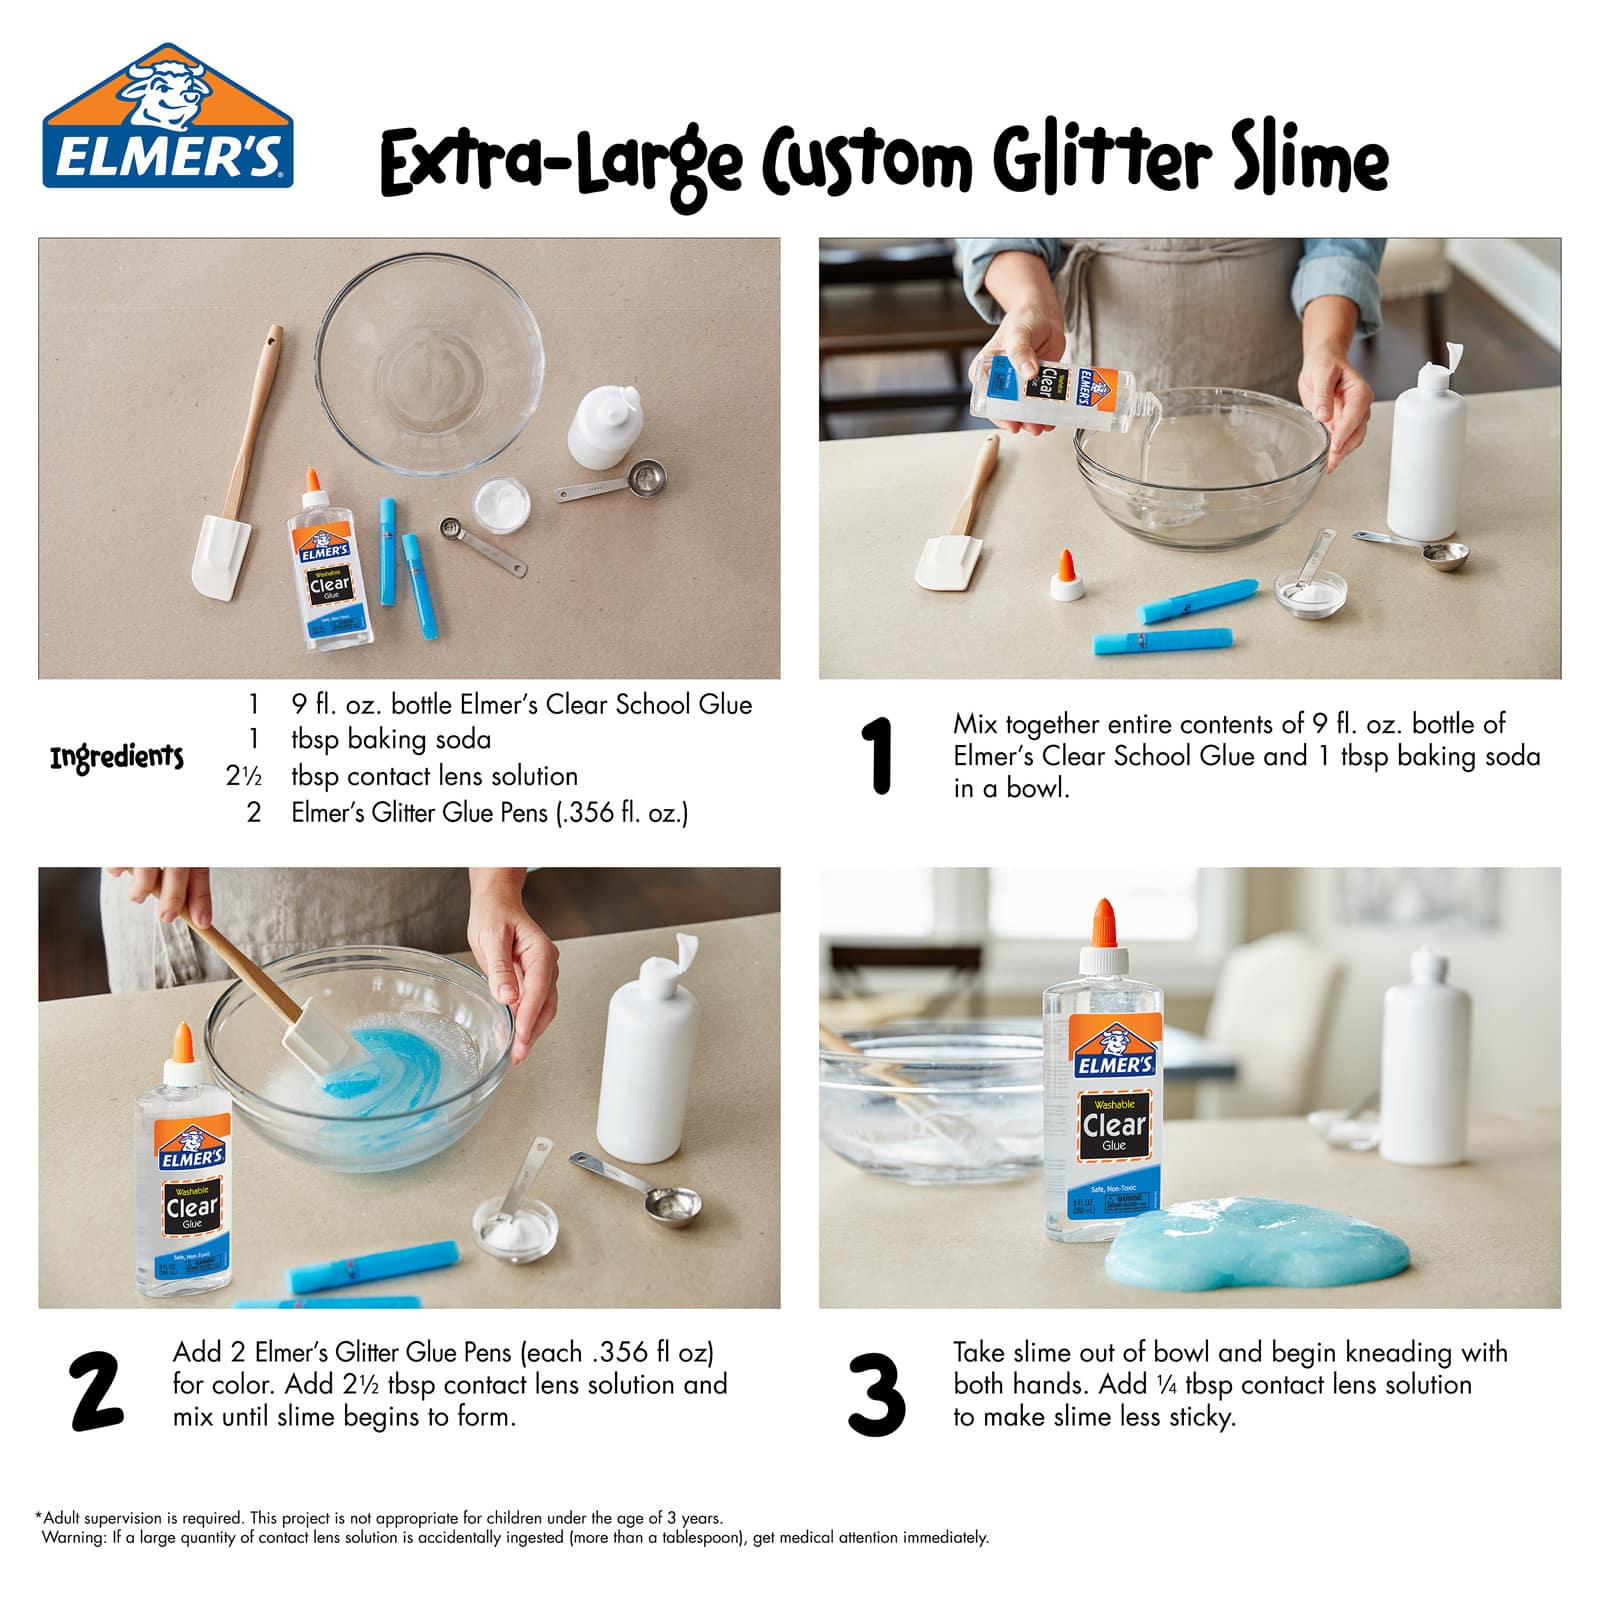 Toy idea that they'll love ago Elmer's Glue ELMER'S WASHABLE CLEAR